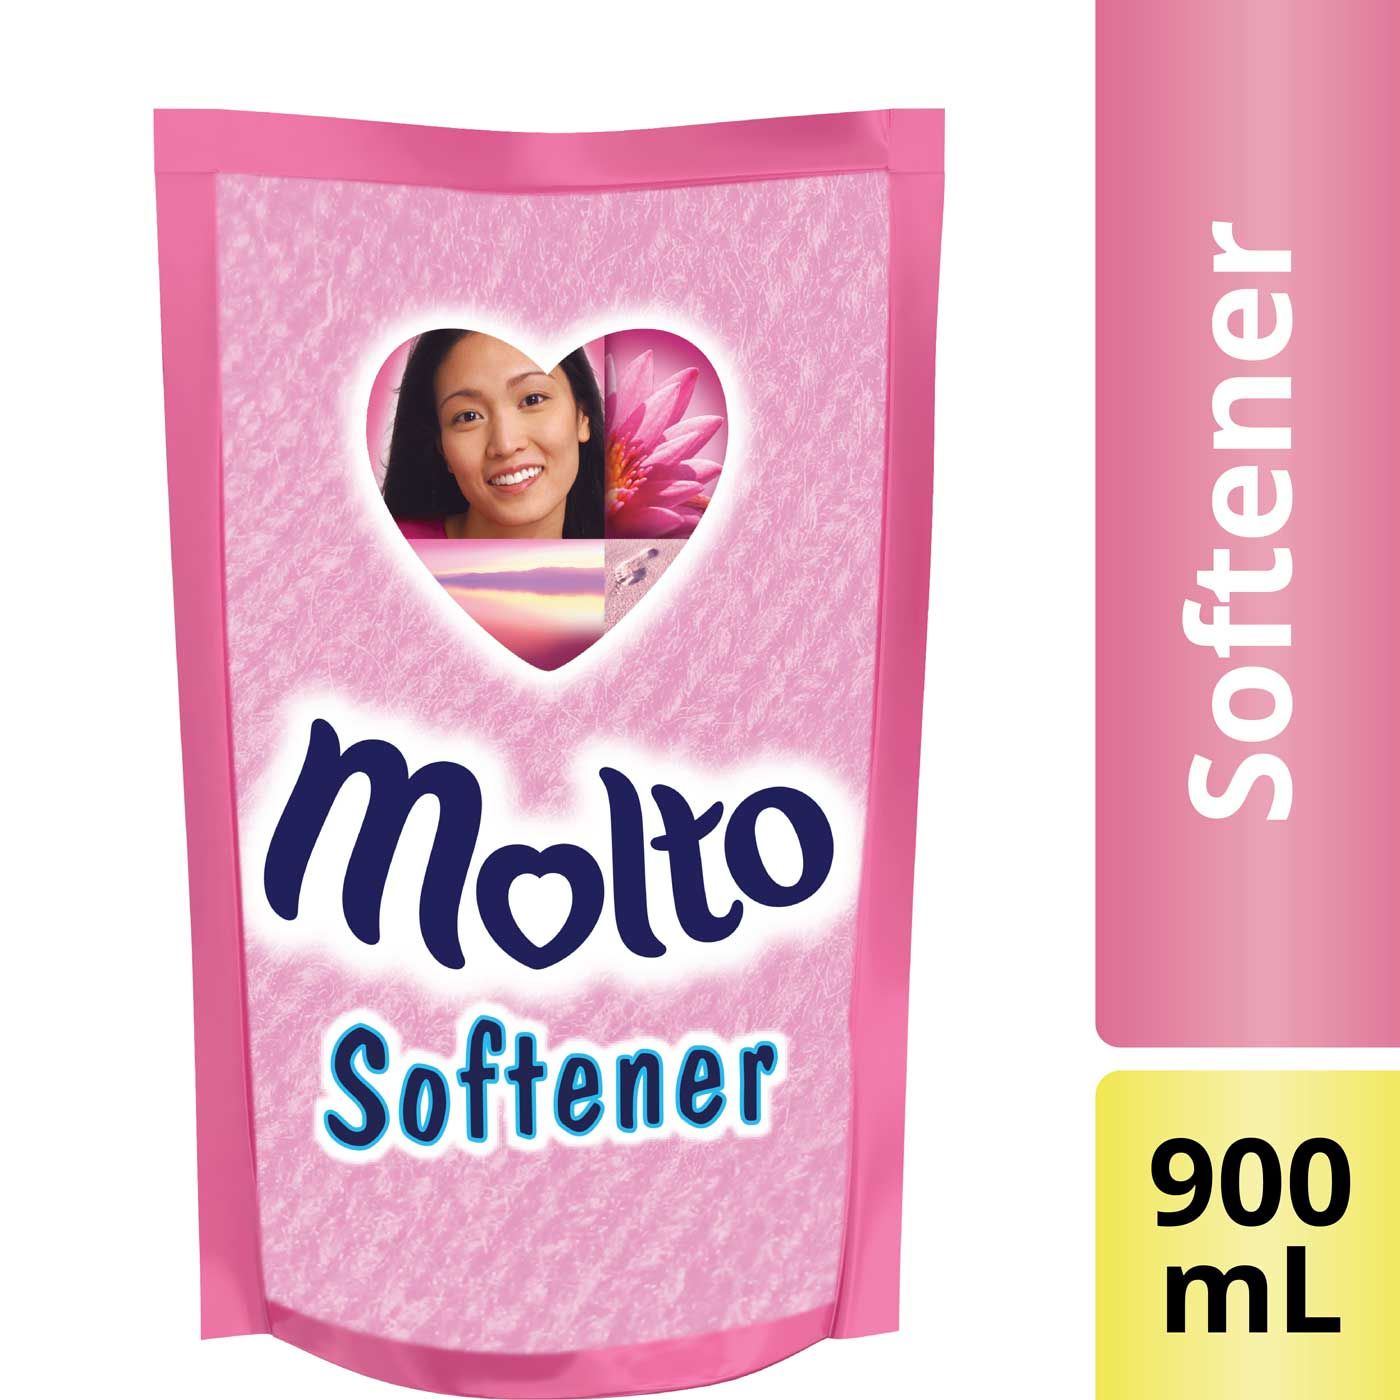 Molto Softener Pink Pch (900ml) - 1